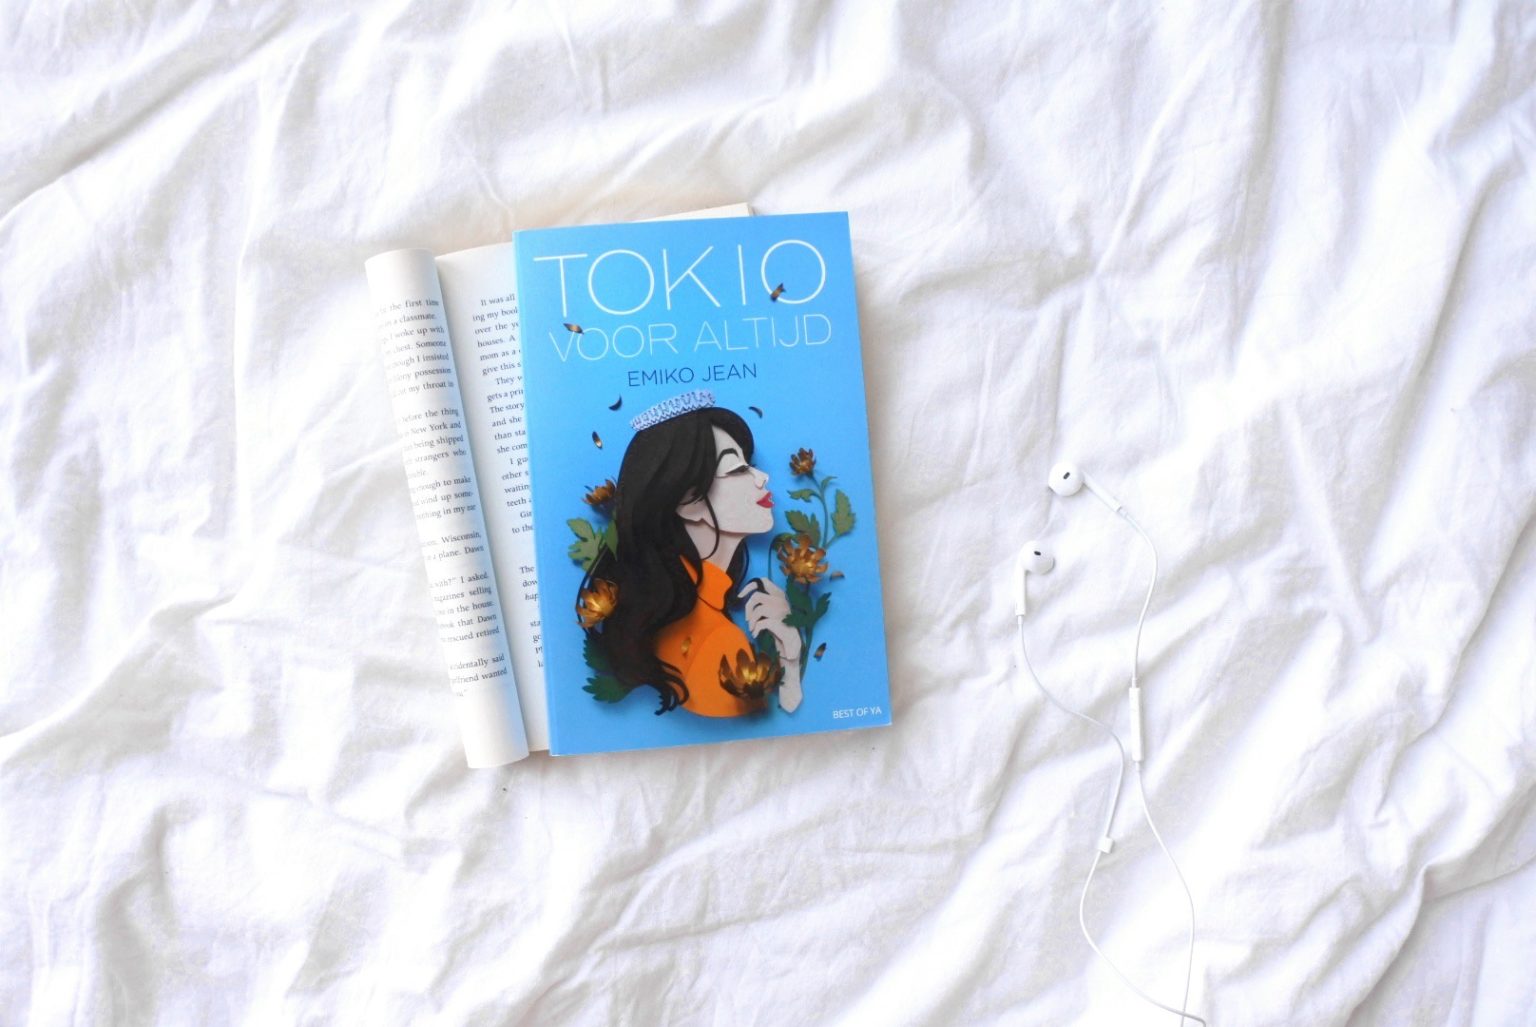 tokyo dreaming paperback